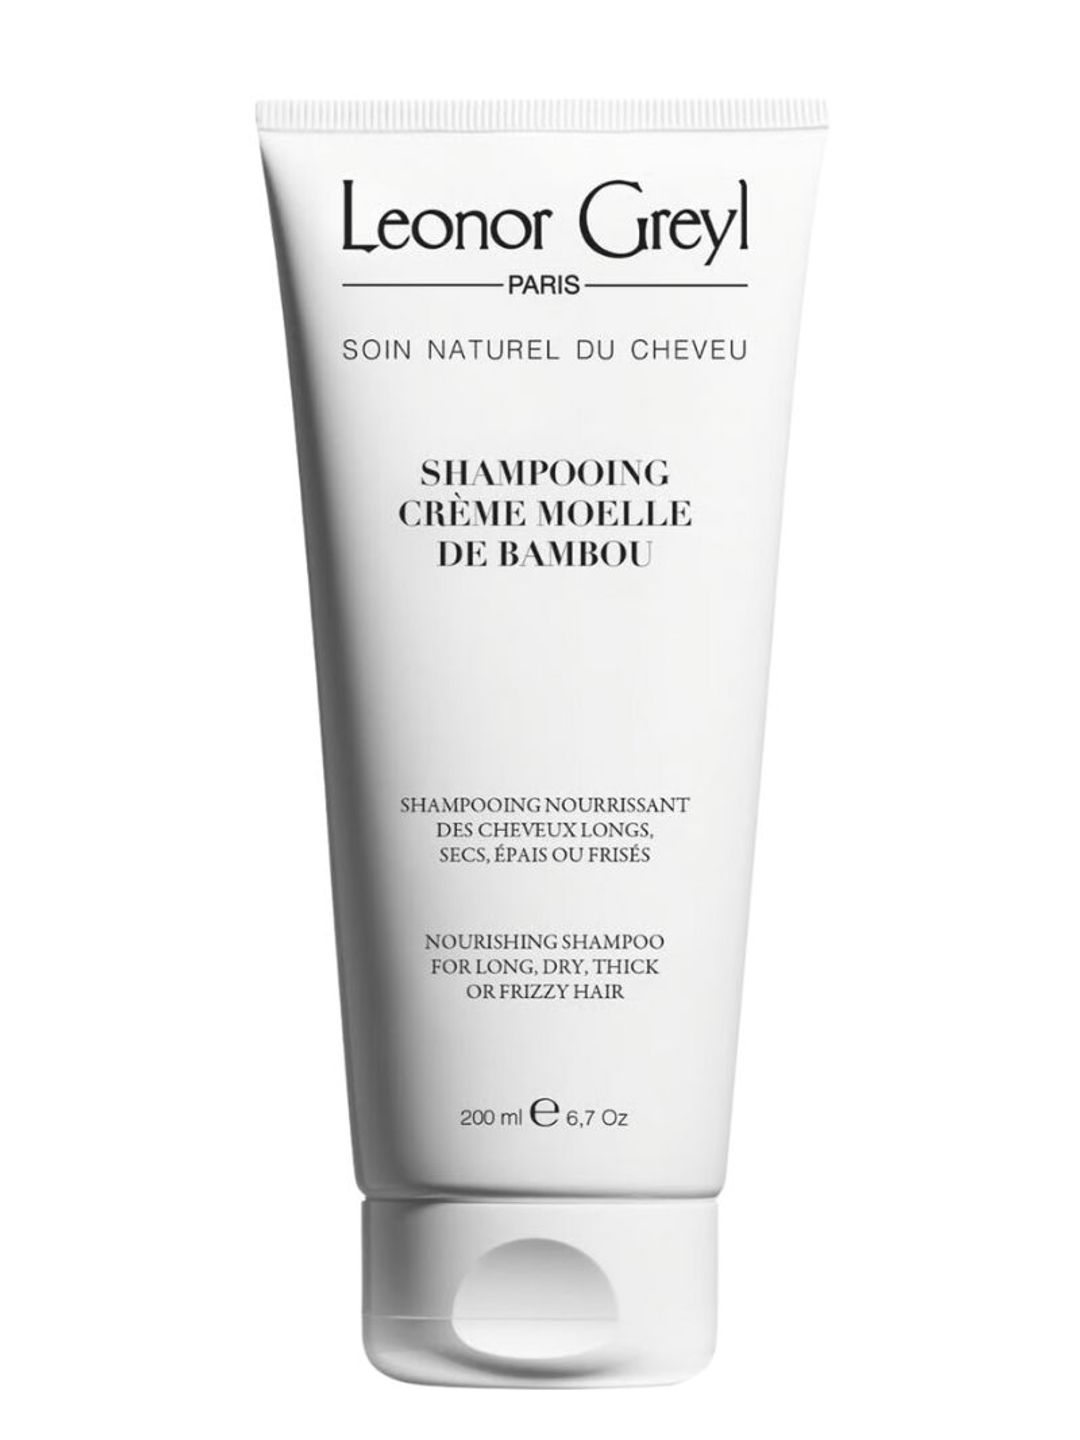 Leonor Greyl shampoo